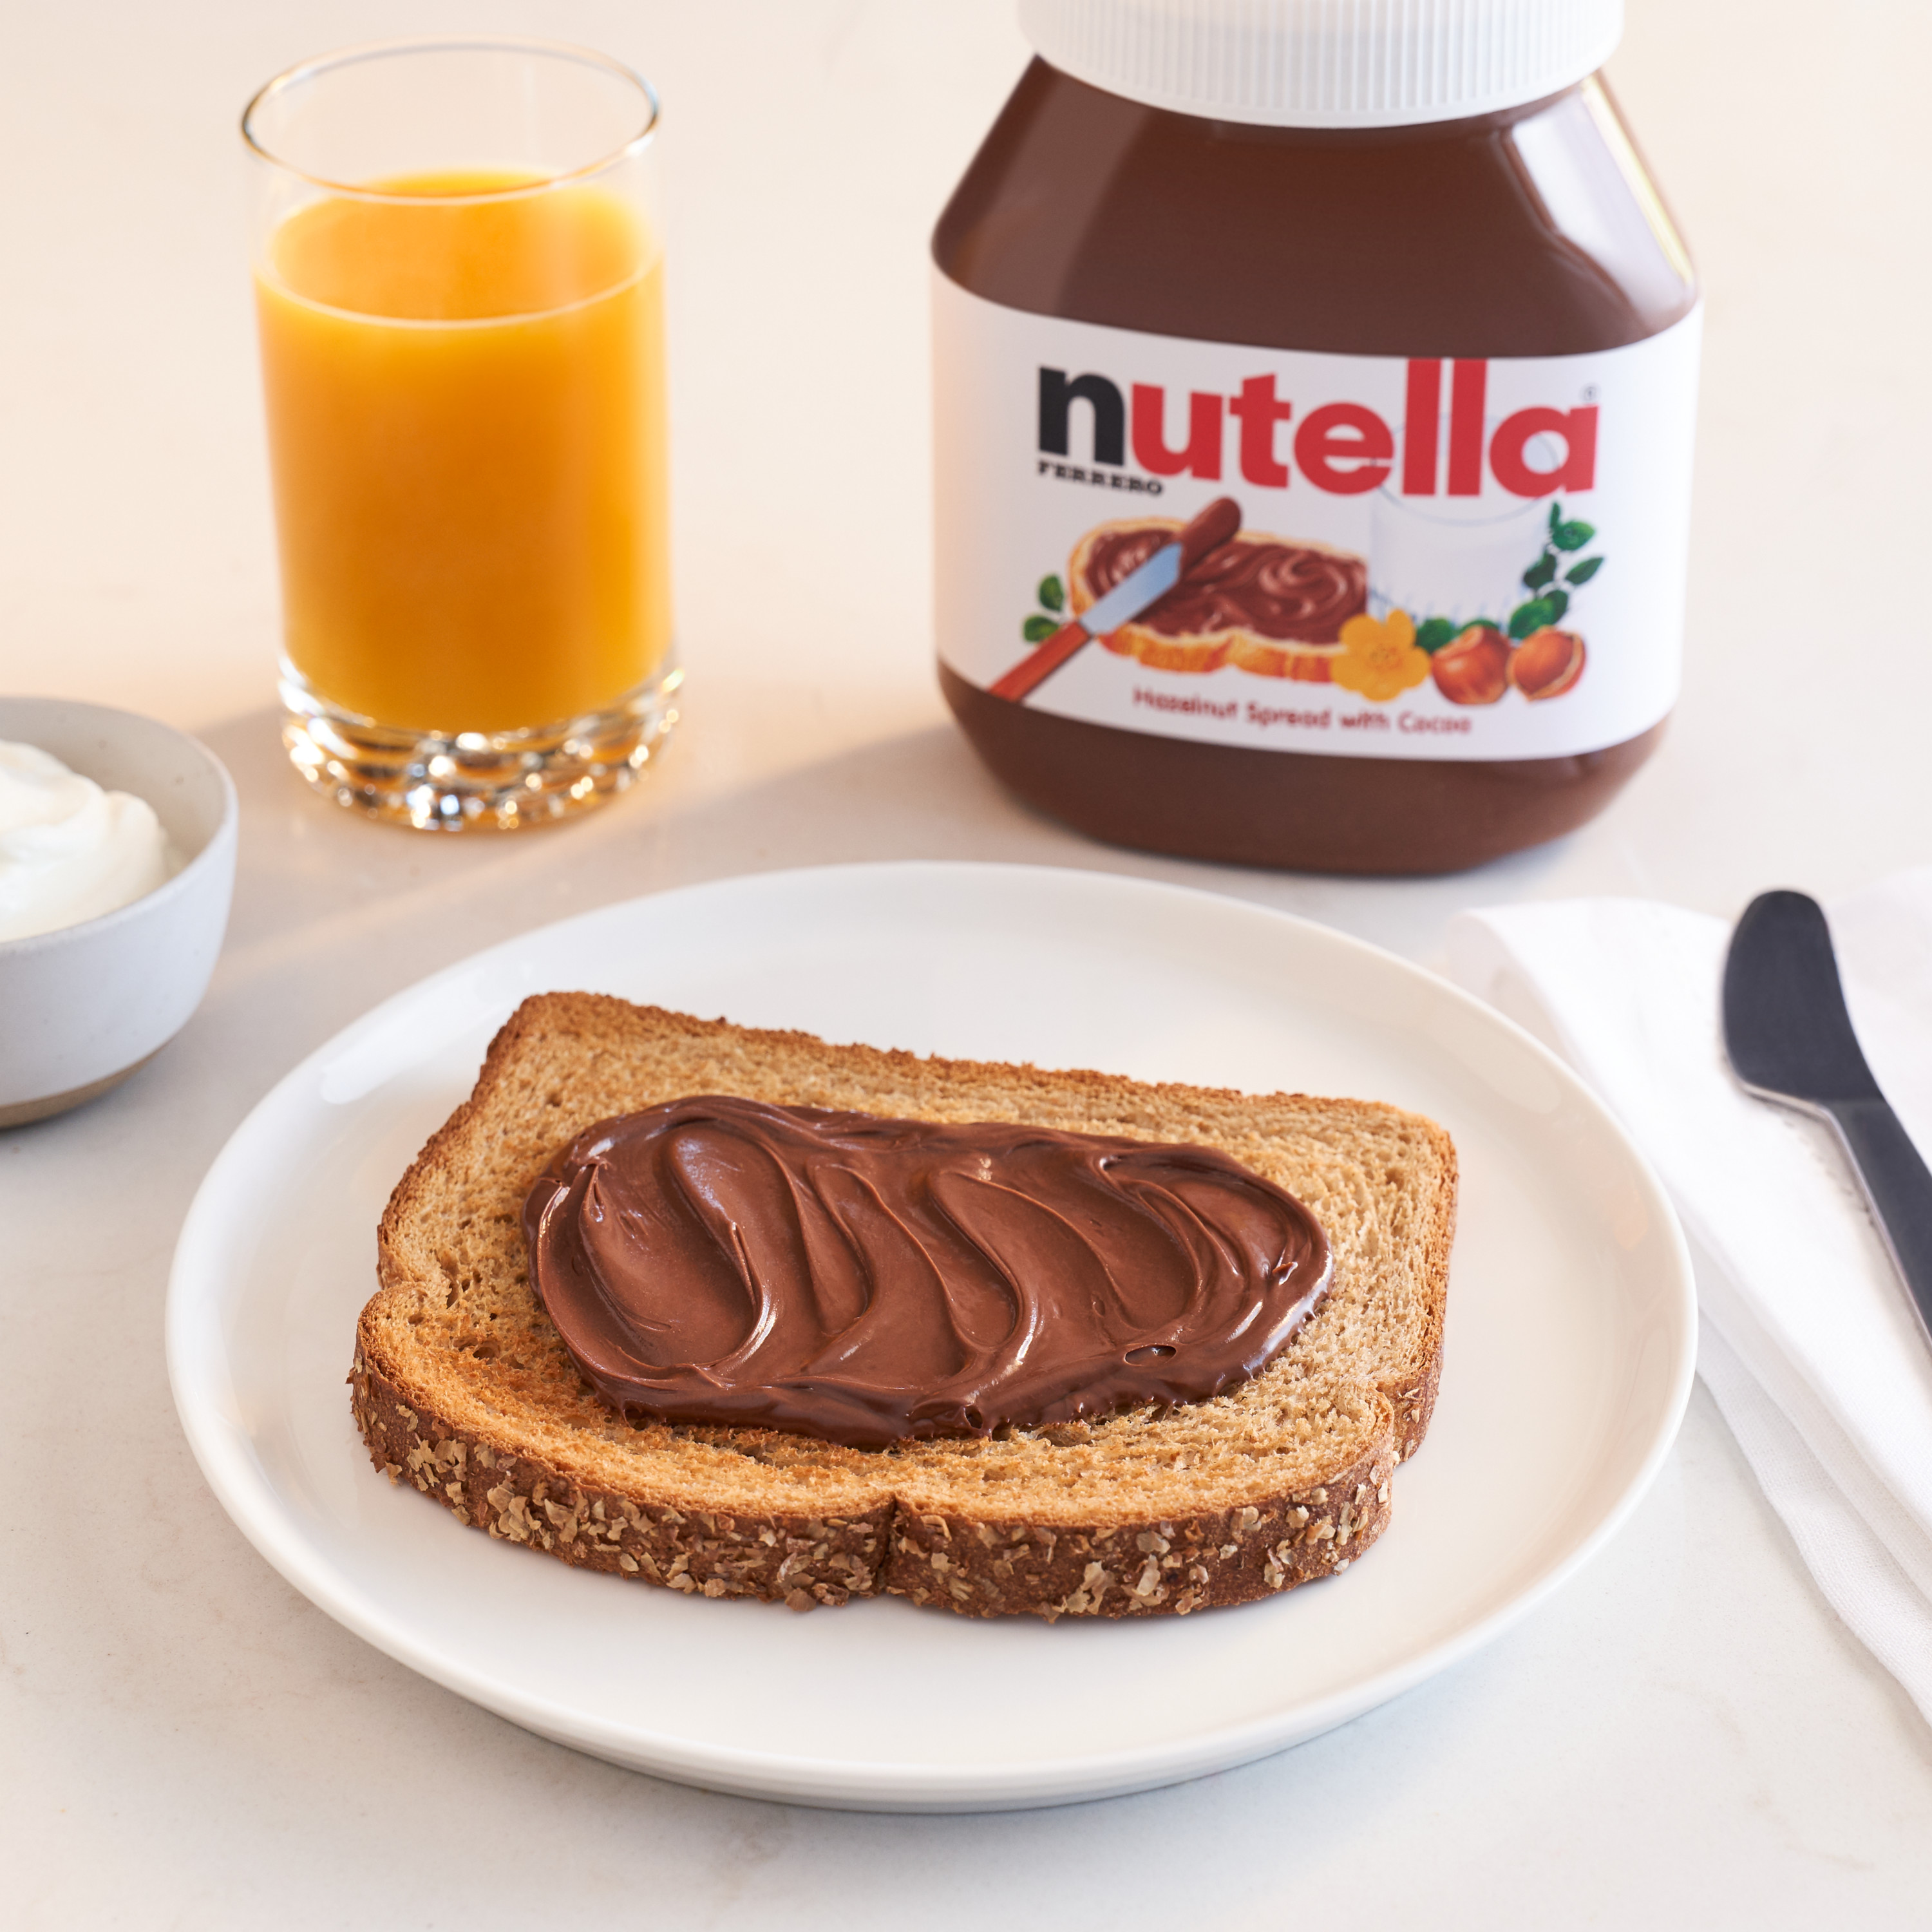 Nutella Hazelnut Spread with Cocoa for Breakfast, 13 oz Jar - image 4 of 8